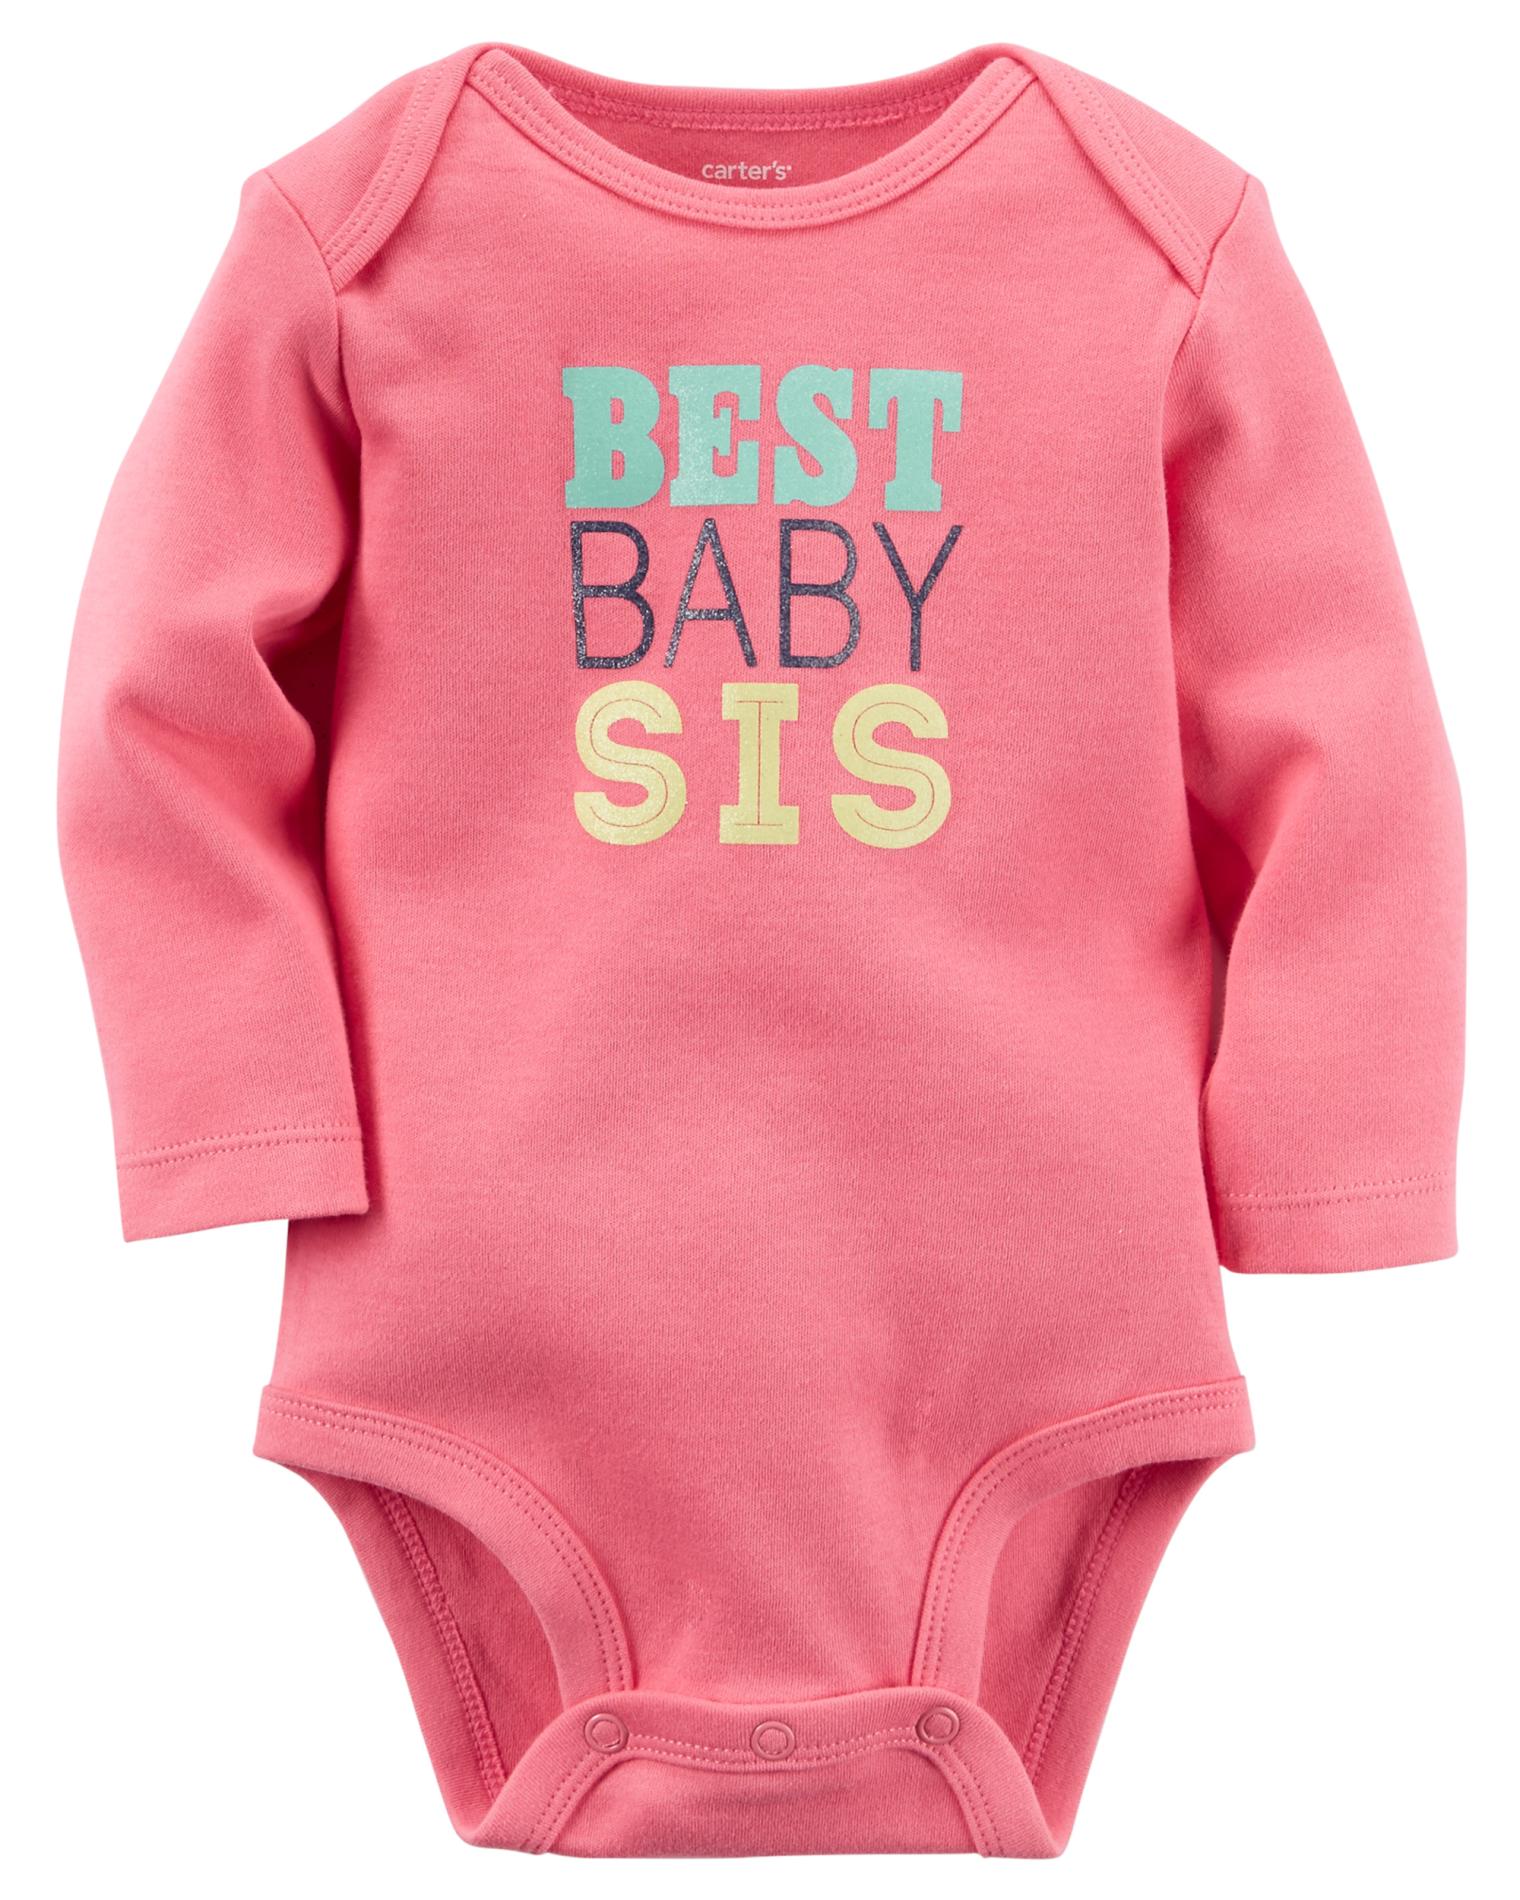 Carter's Newborn & Infant Girls' Bodysuit - Best Baby Sis